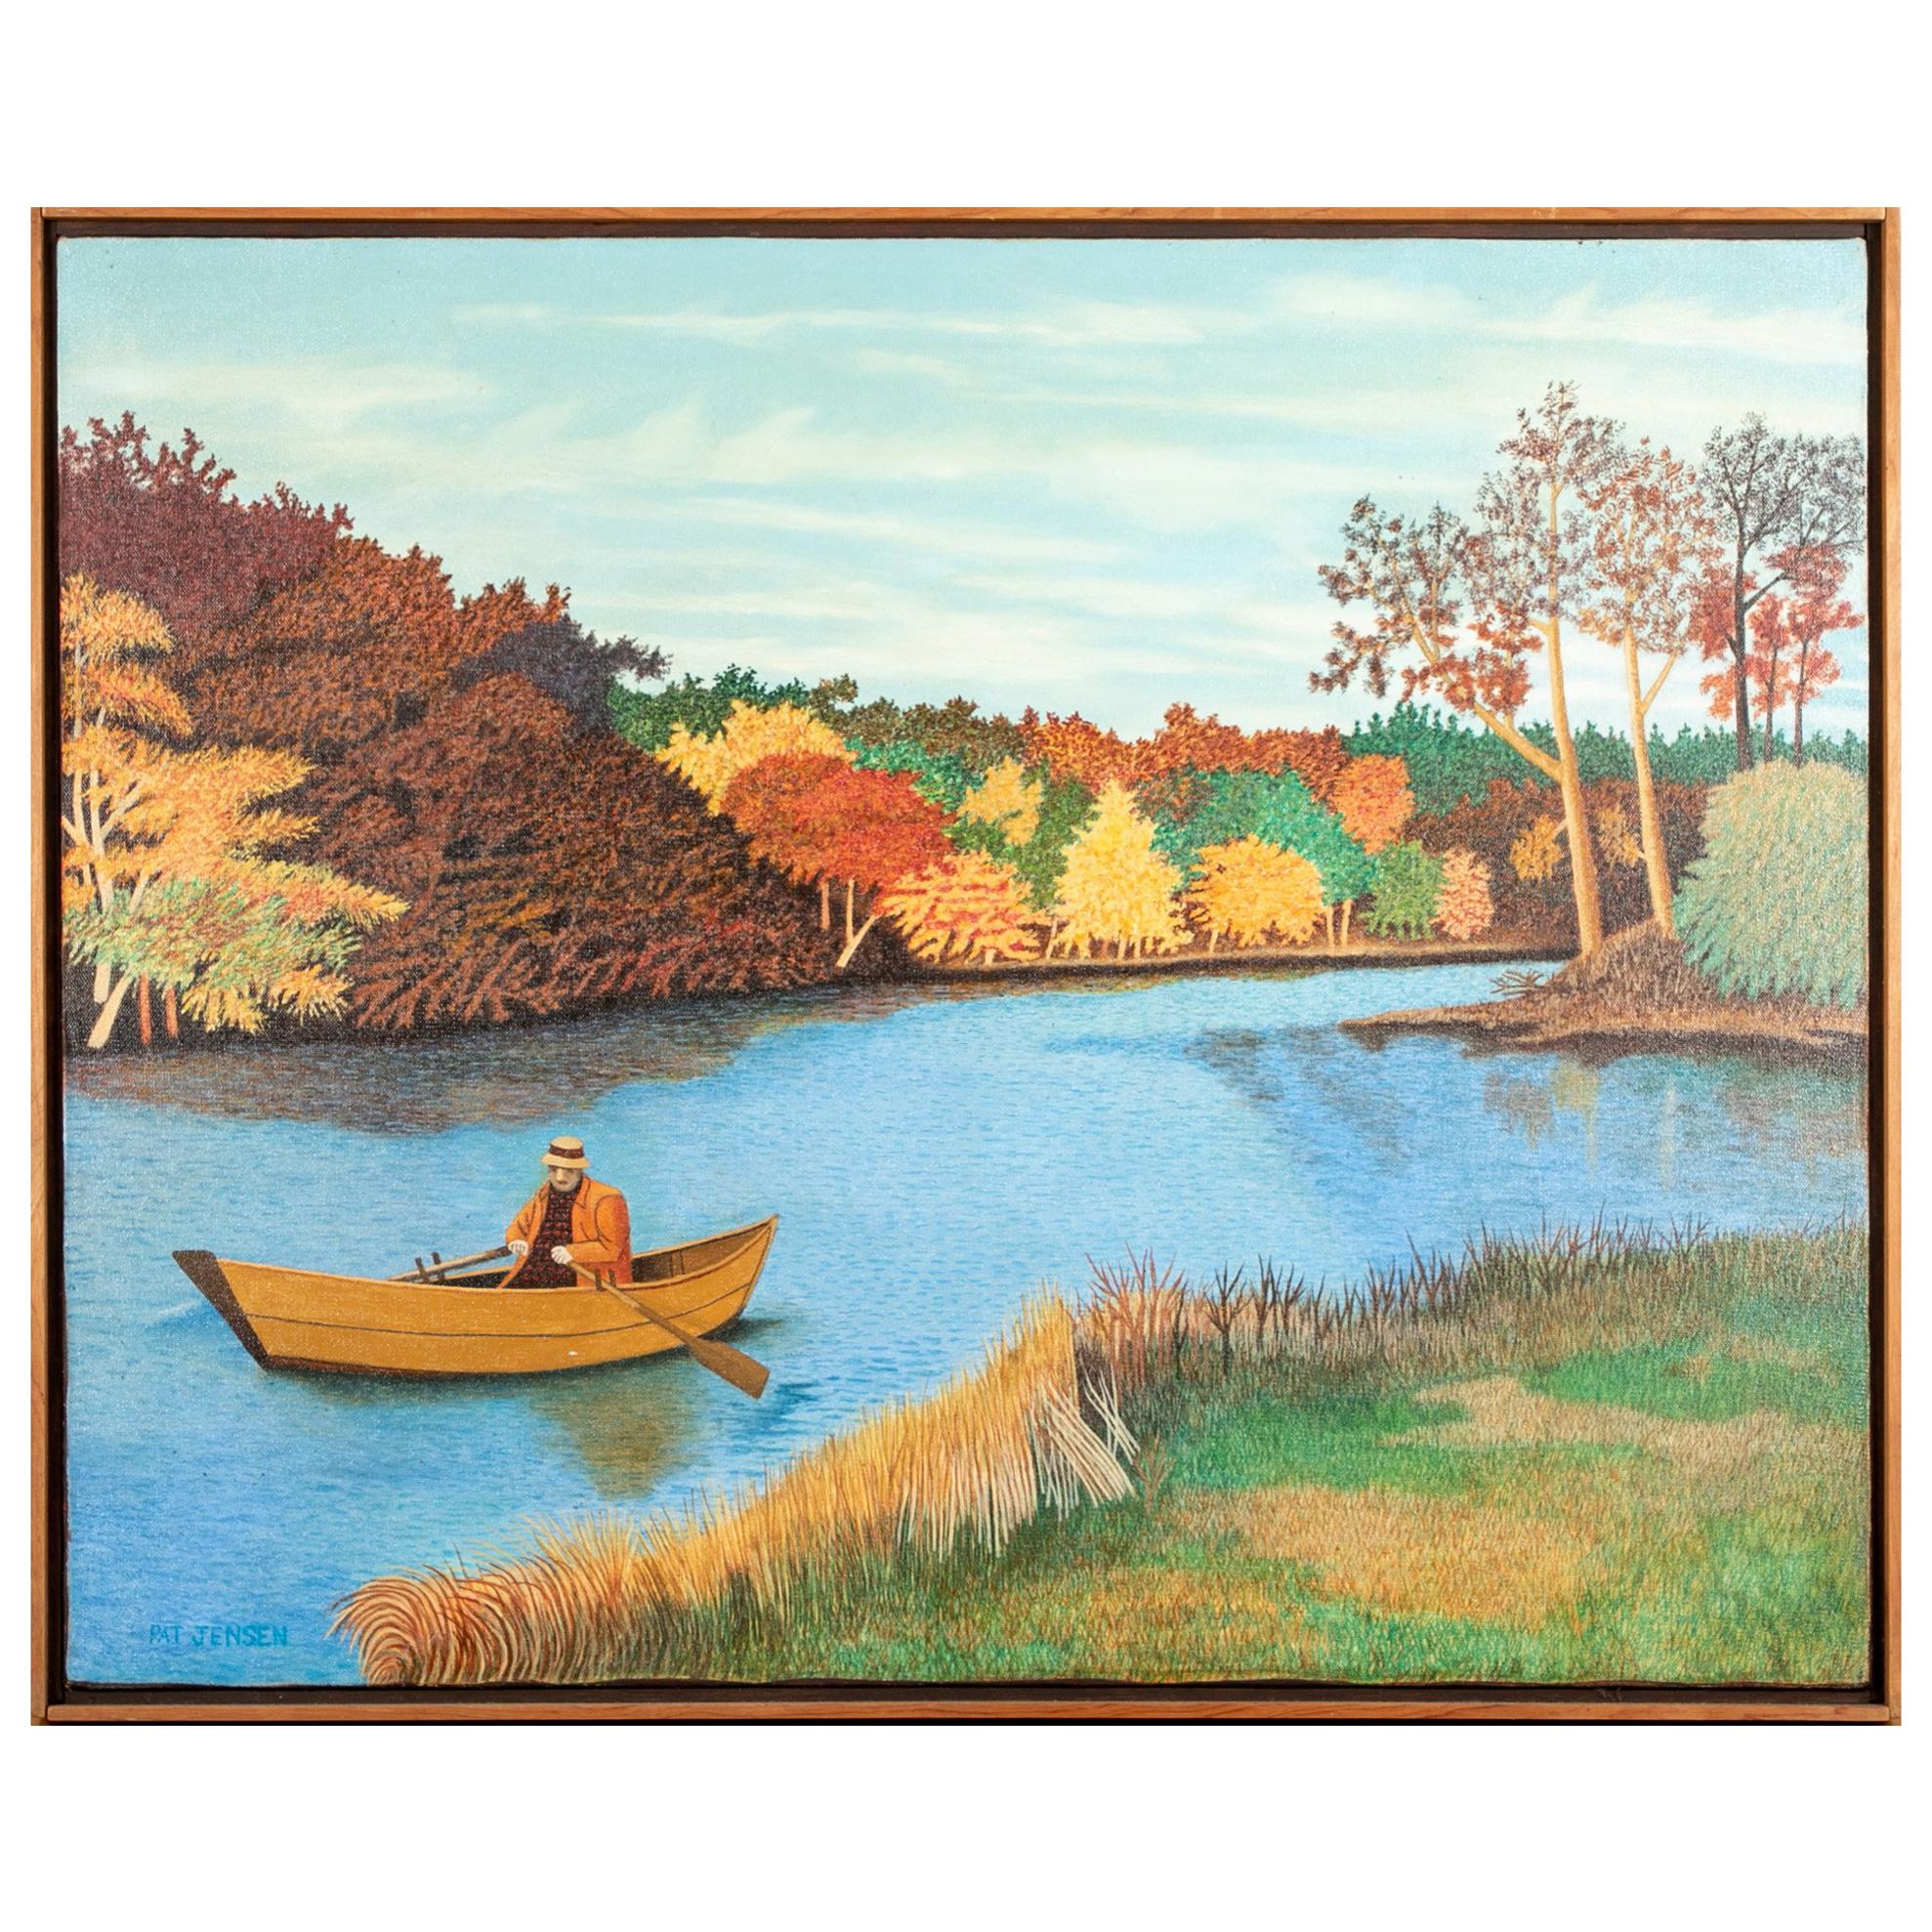 Pat Jensen, Oil On Canvas, "Falls River"